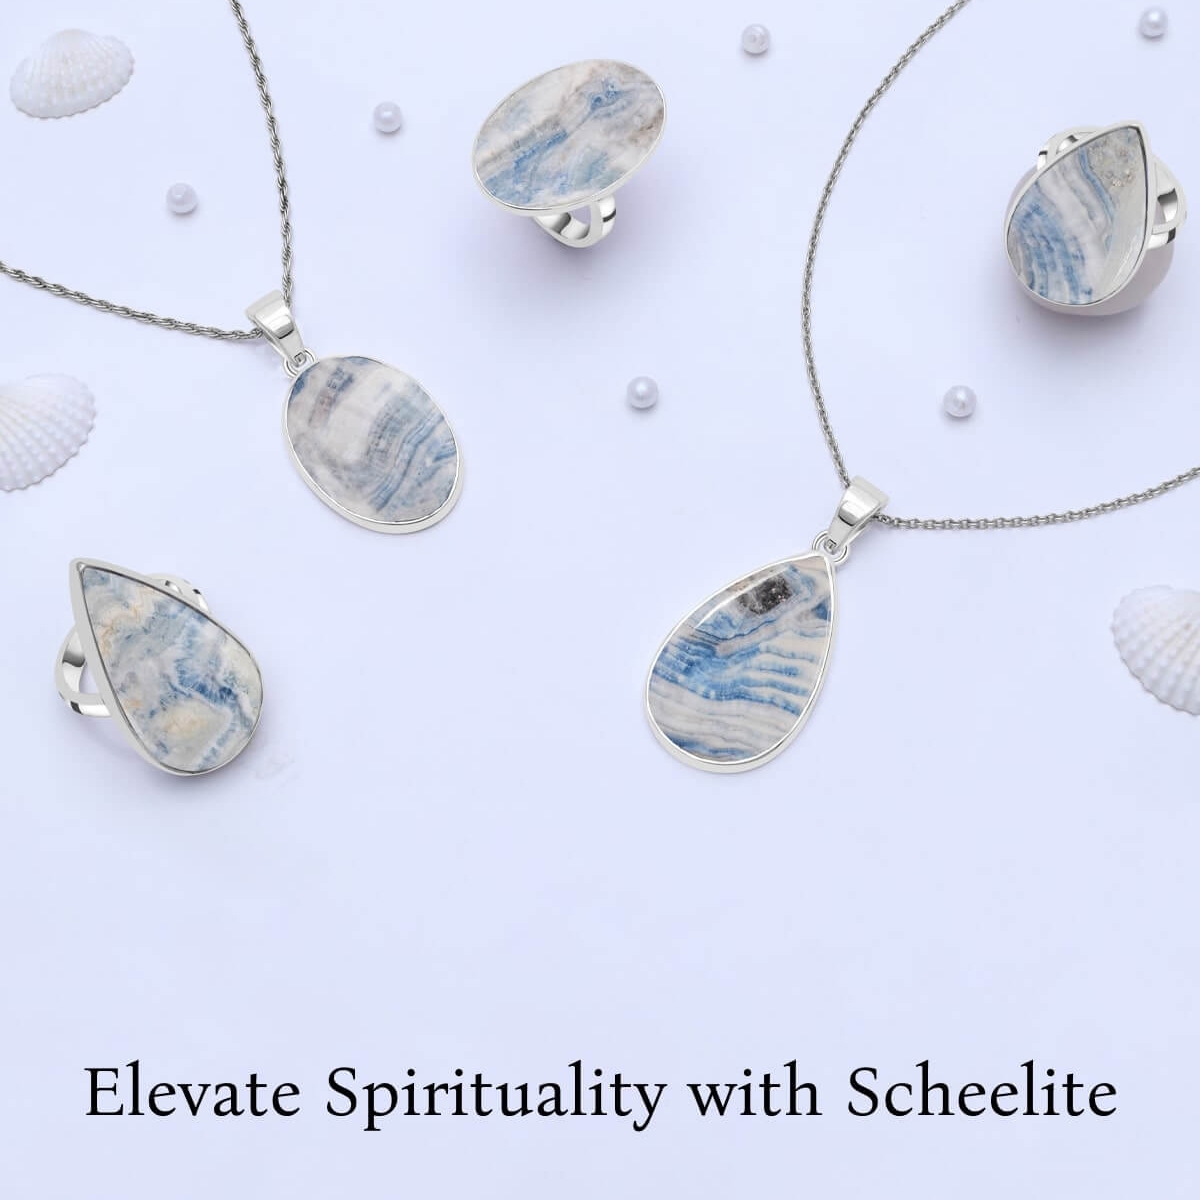 Scheelite stone Spiritual Properties and Benefits